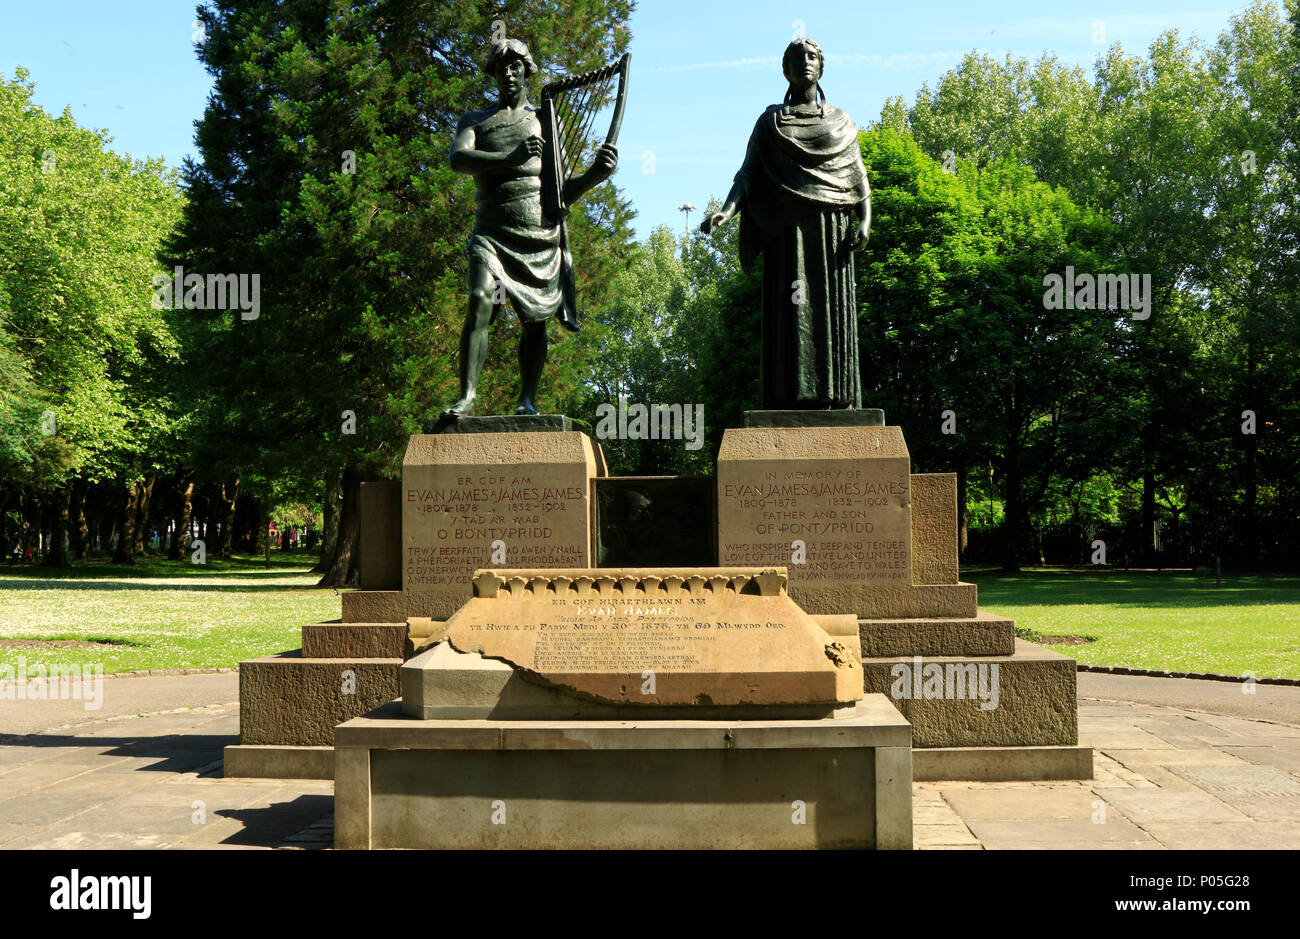 Edward James and James James statue Ynysanghard Park, Pontypridd, South Wales, UK. Stock Photo